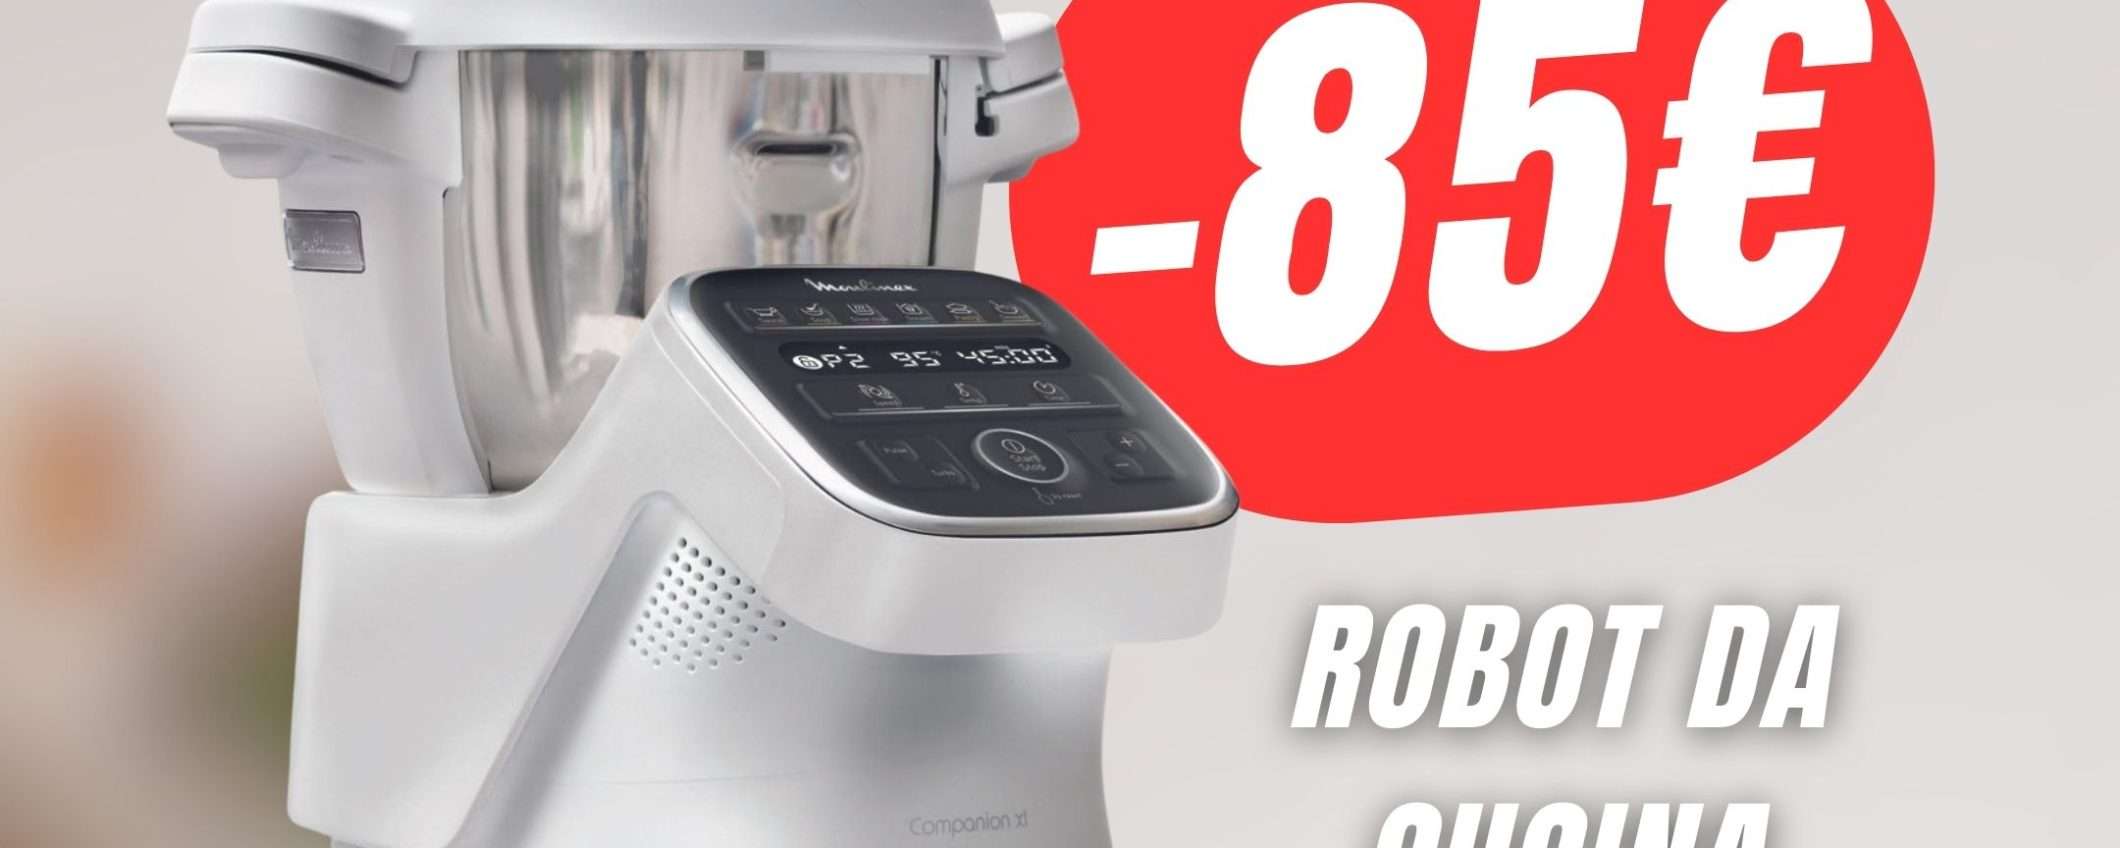 Il Robot da Cucina di Moulinex è scontato di 85€